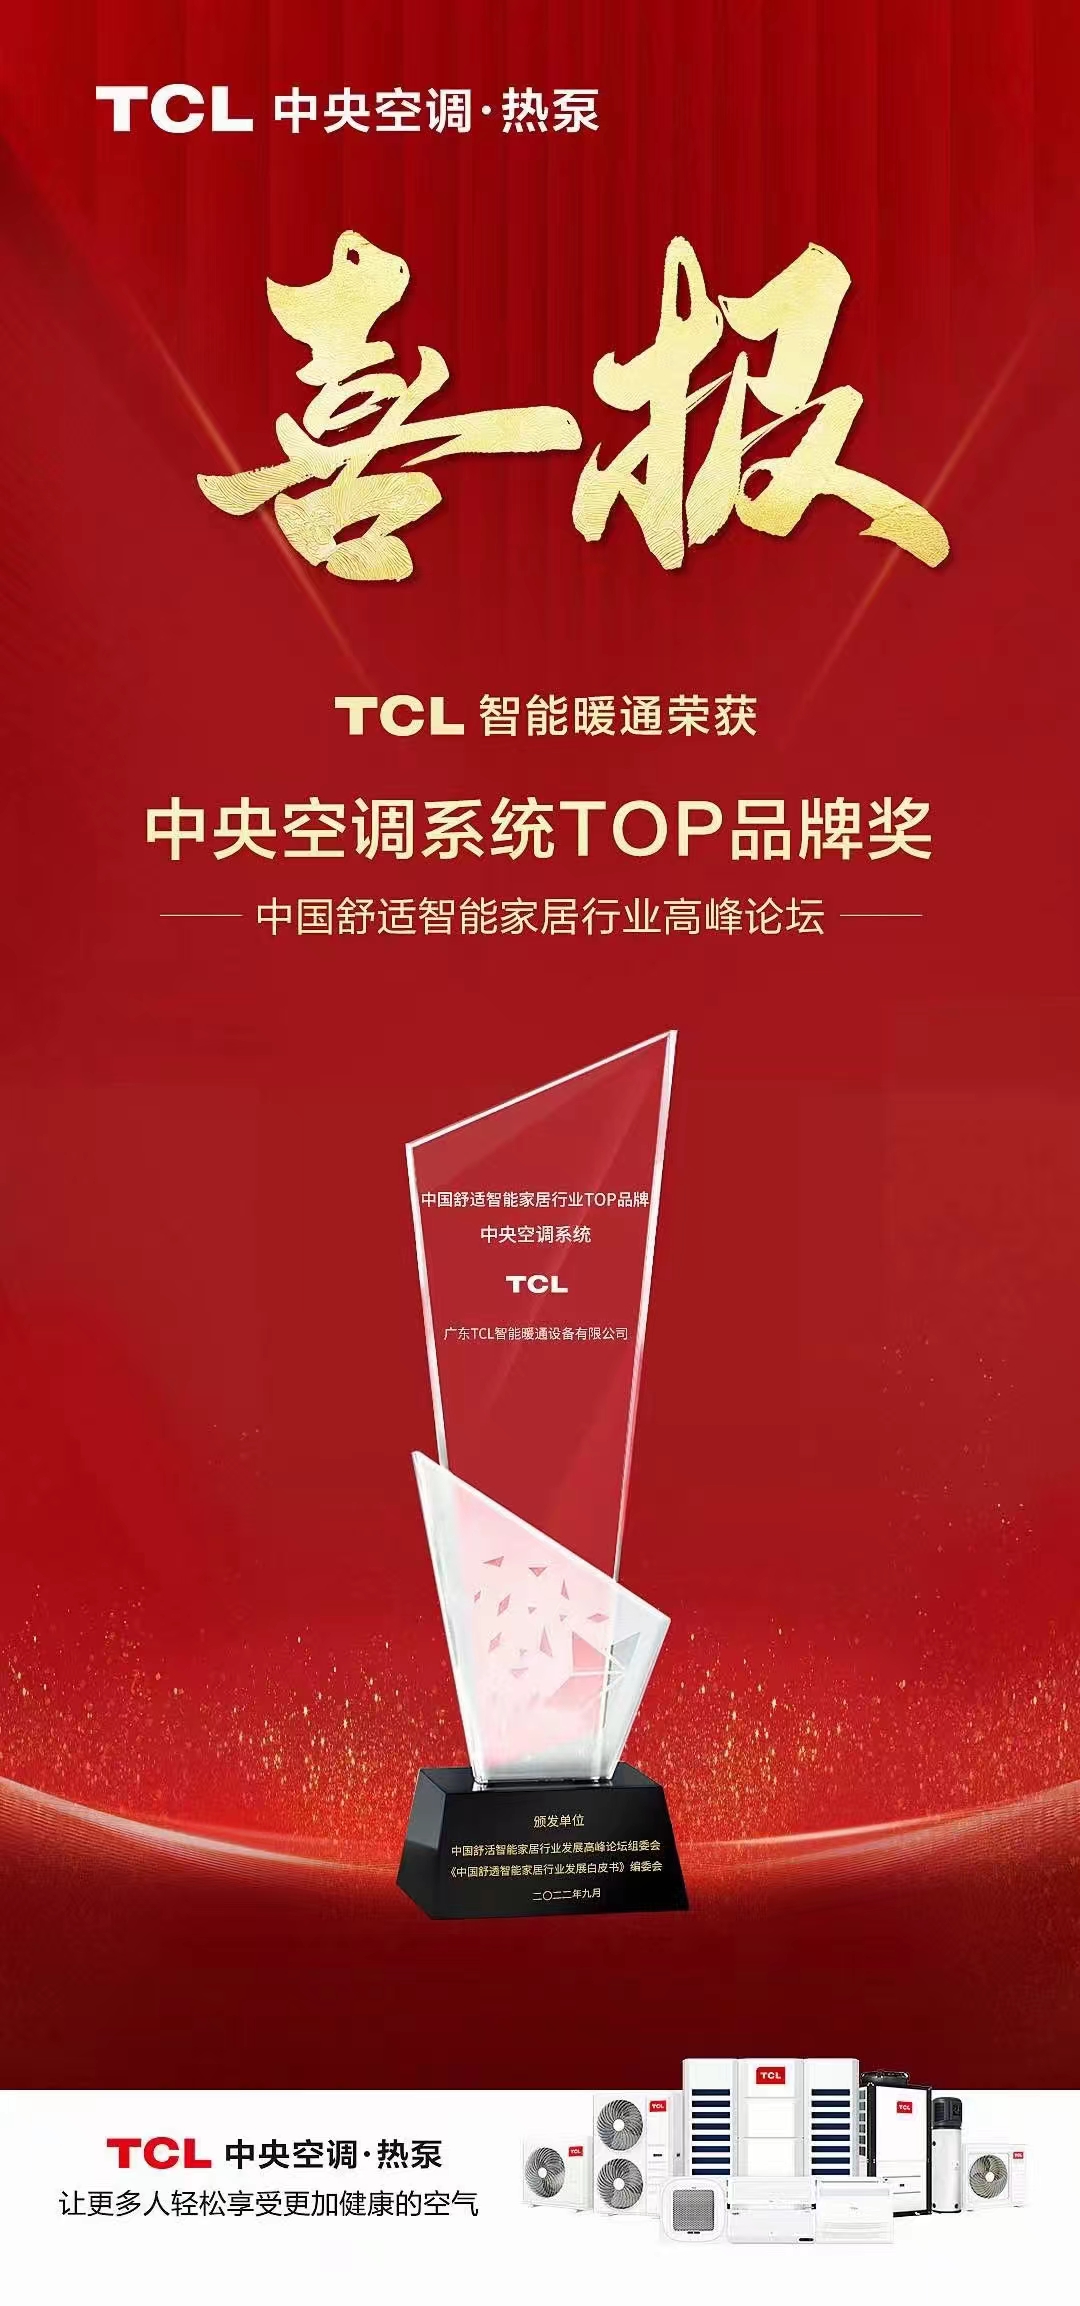 TCL商用空调获“中央空调系统TOP品牌奖”